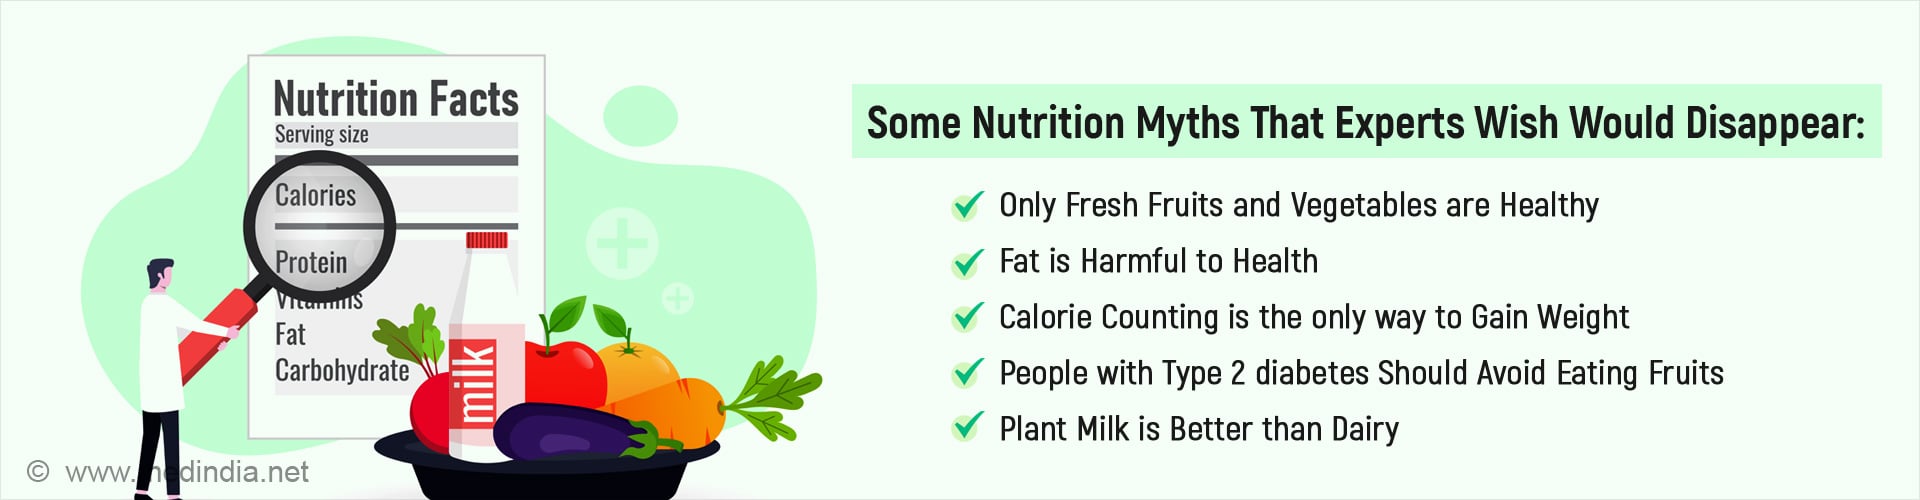 Top 5 Nutrition Myths Debunked